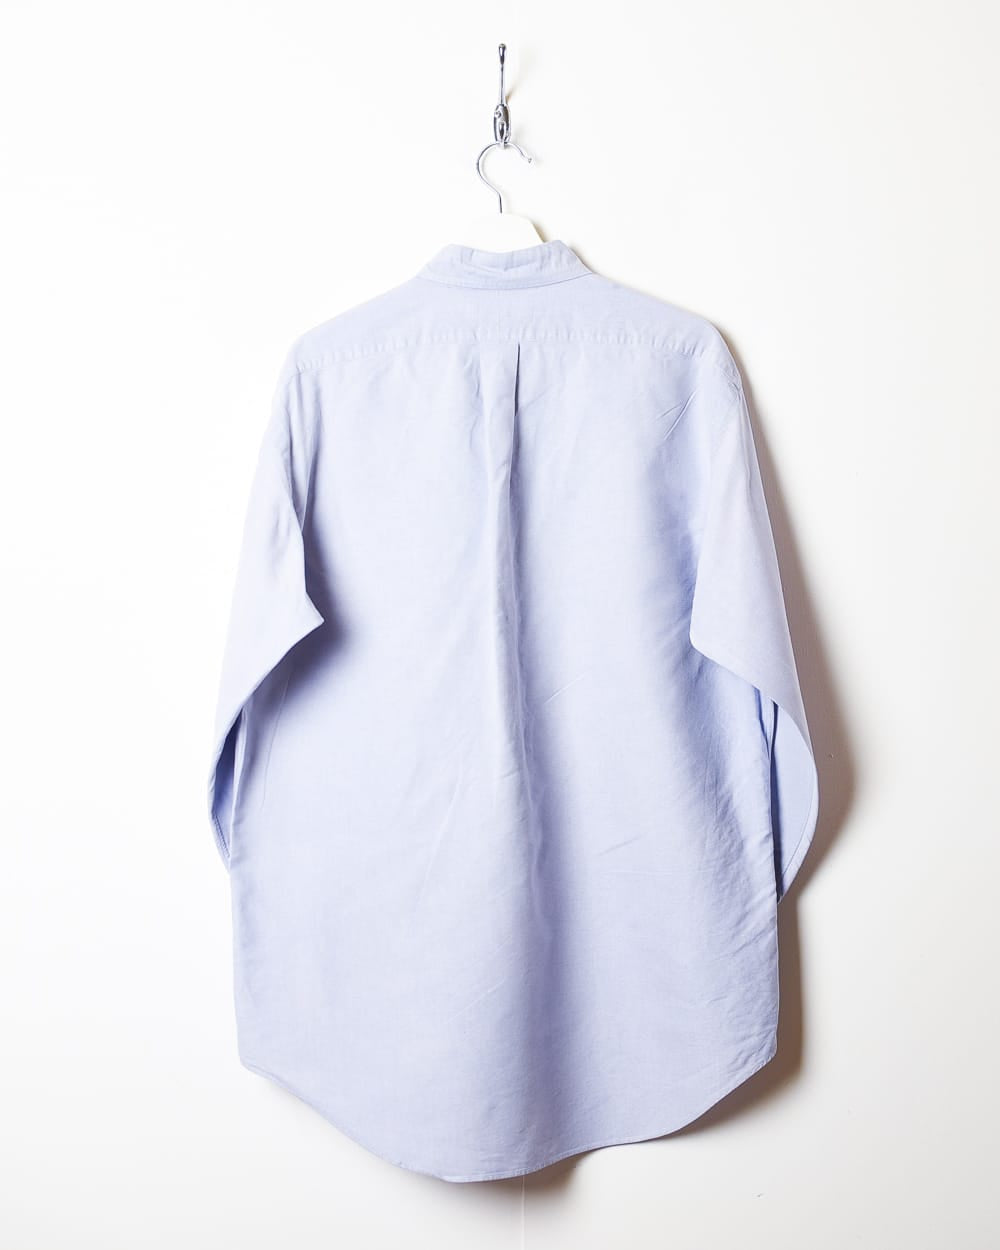 BabyBlue Polo Ralph Lauren Yarmouth Shirt - Large